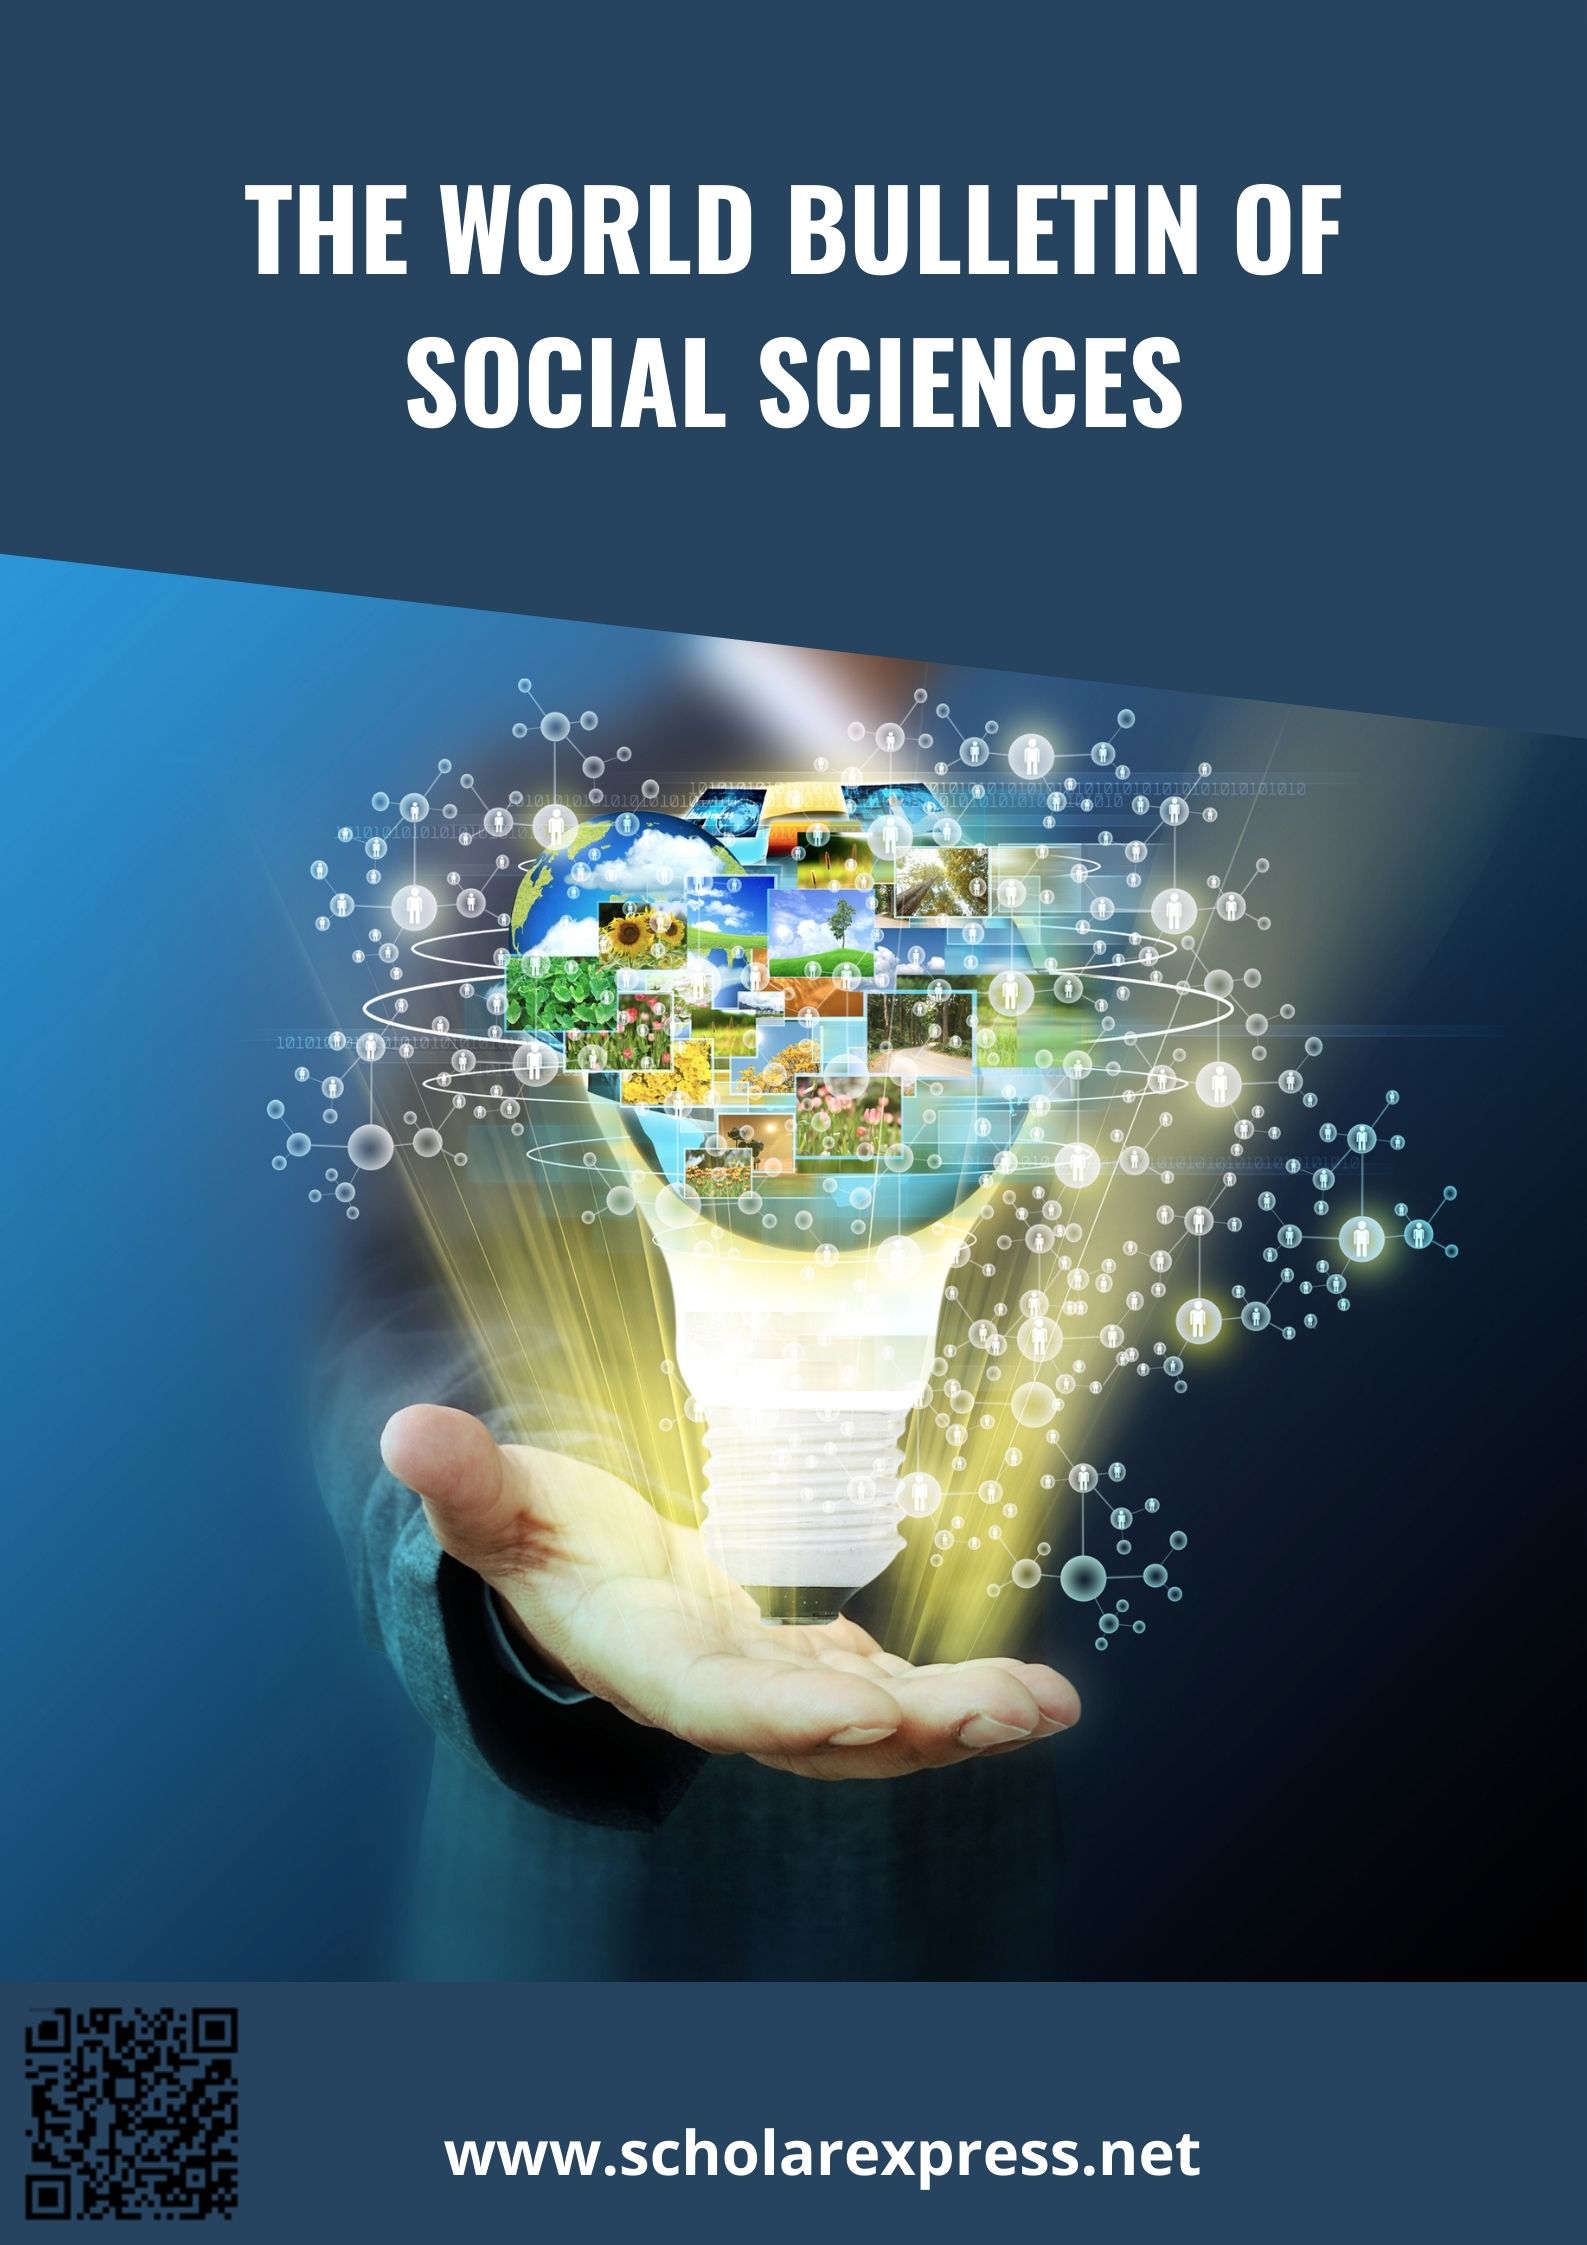 The World Bulletin of Social Sciences (WBSS) 